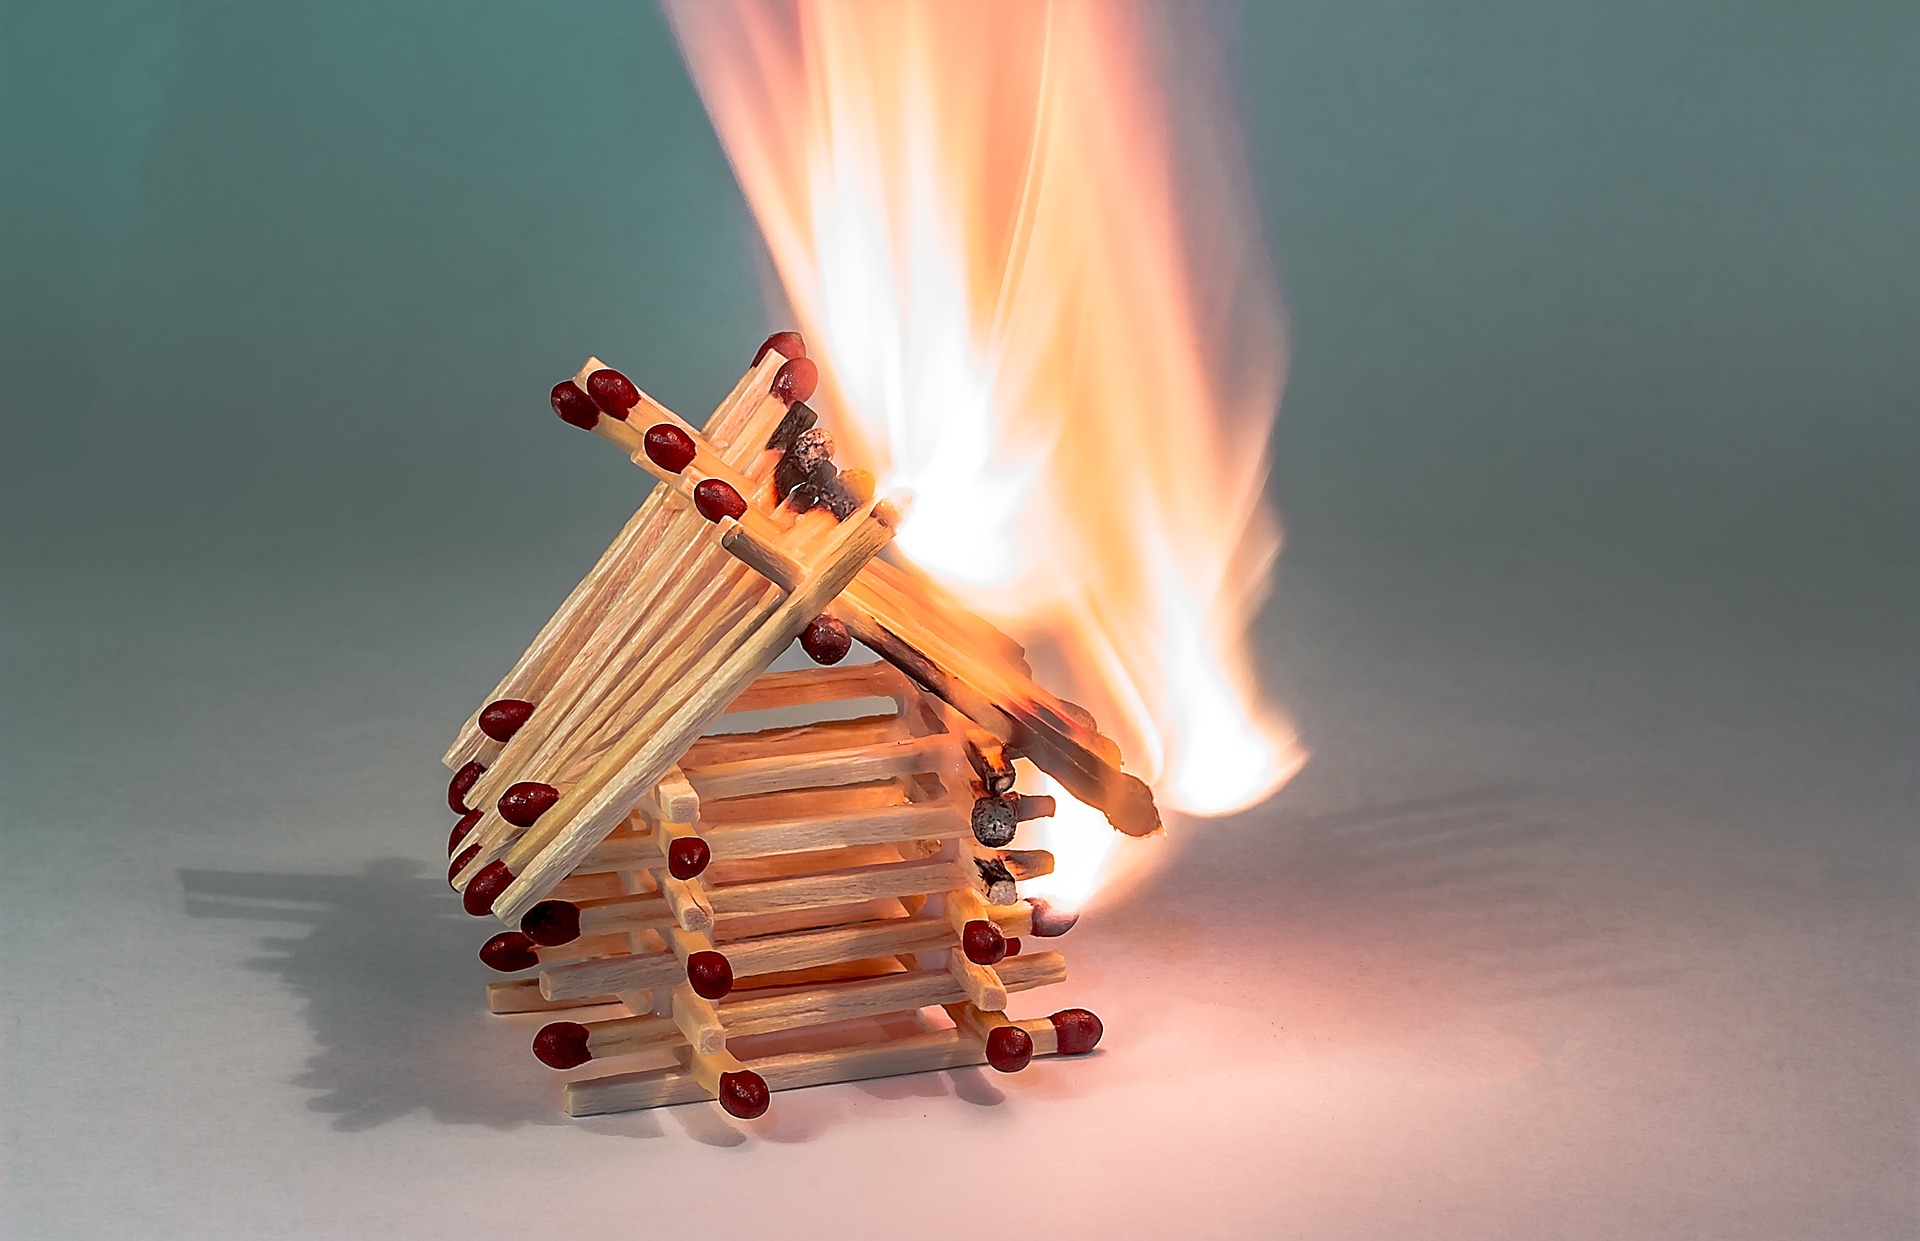 A house made of matchsticks on fire